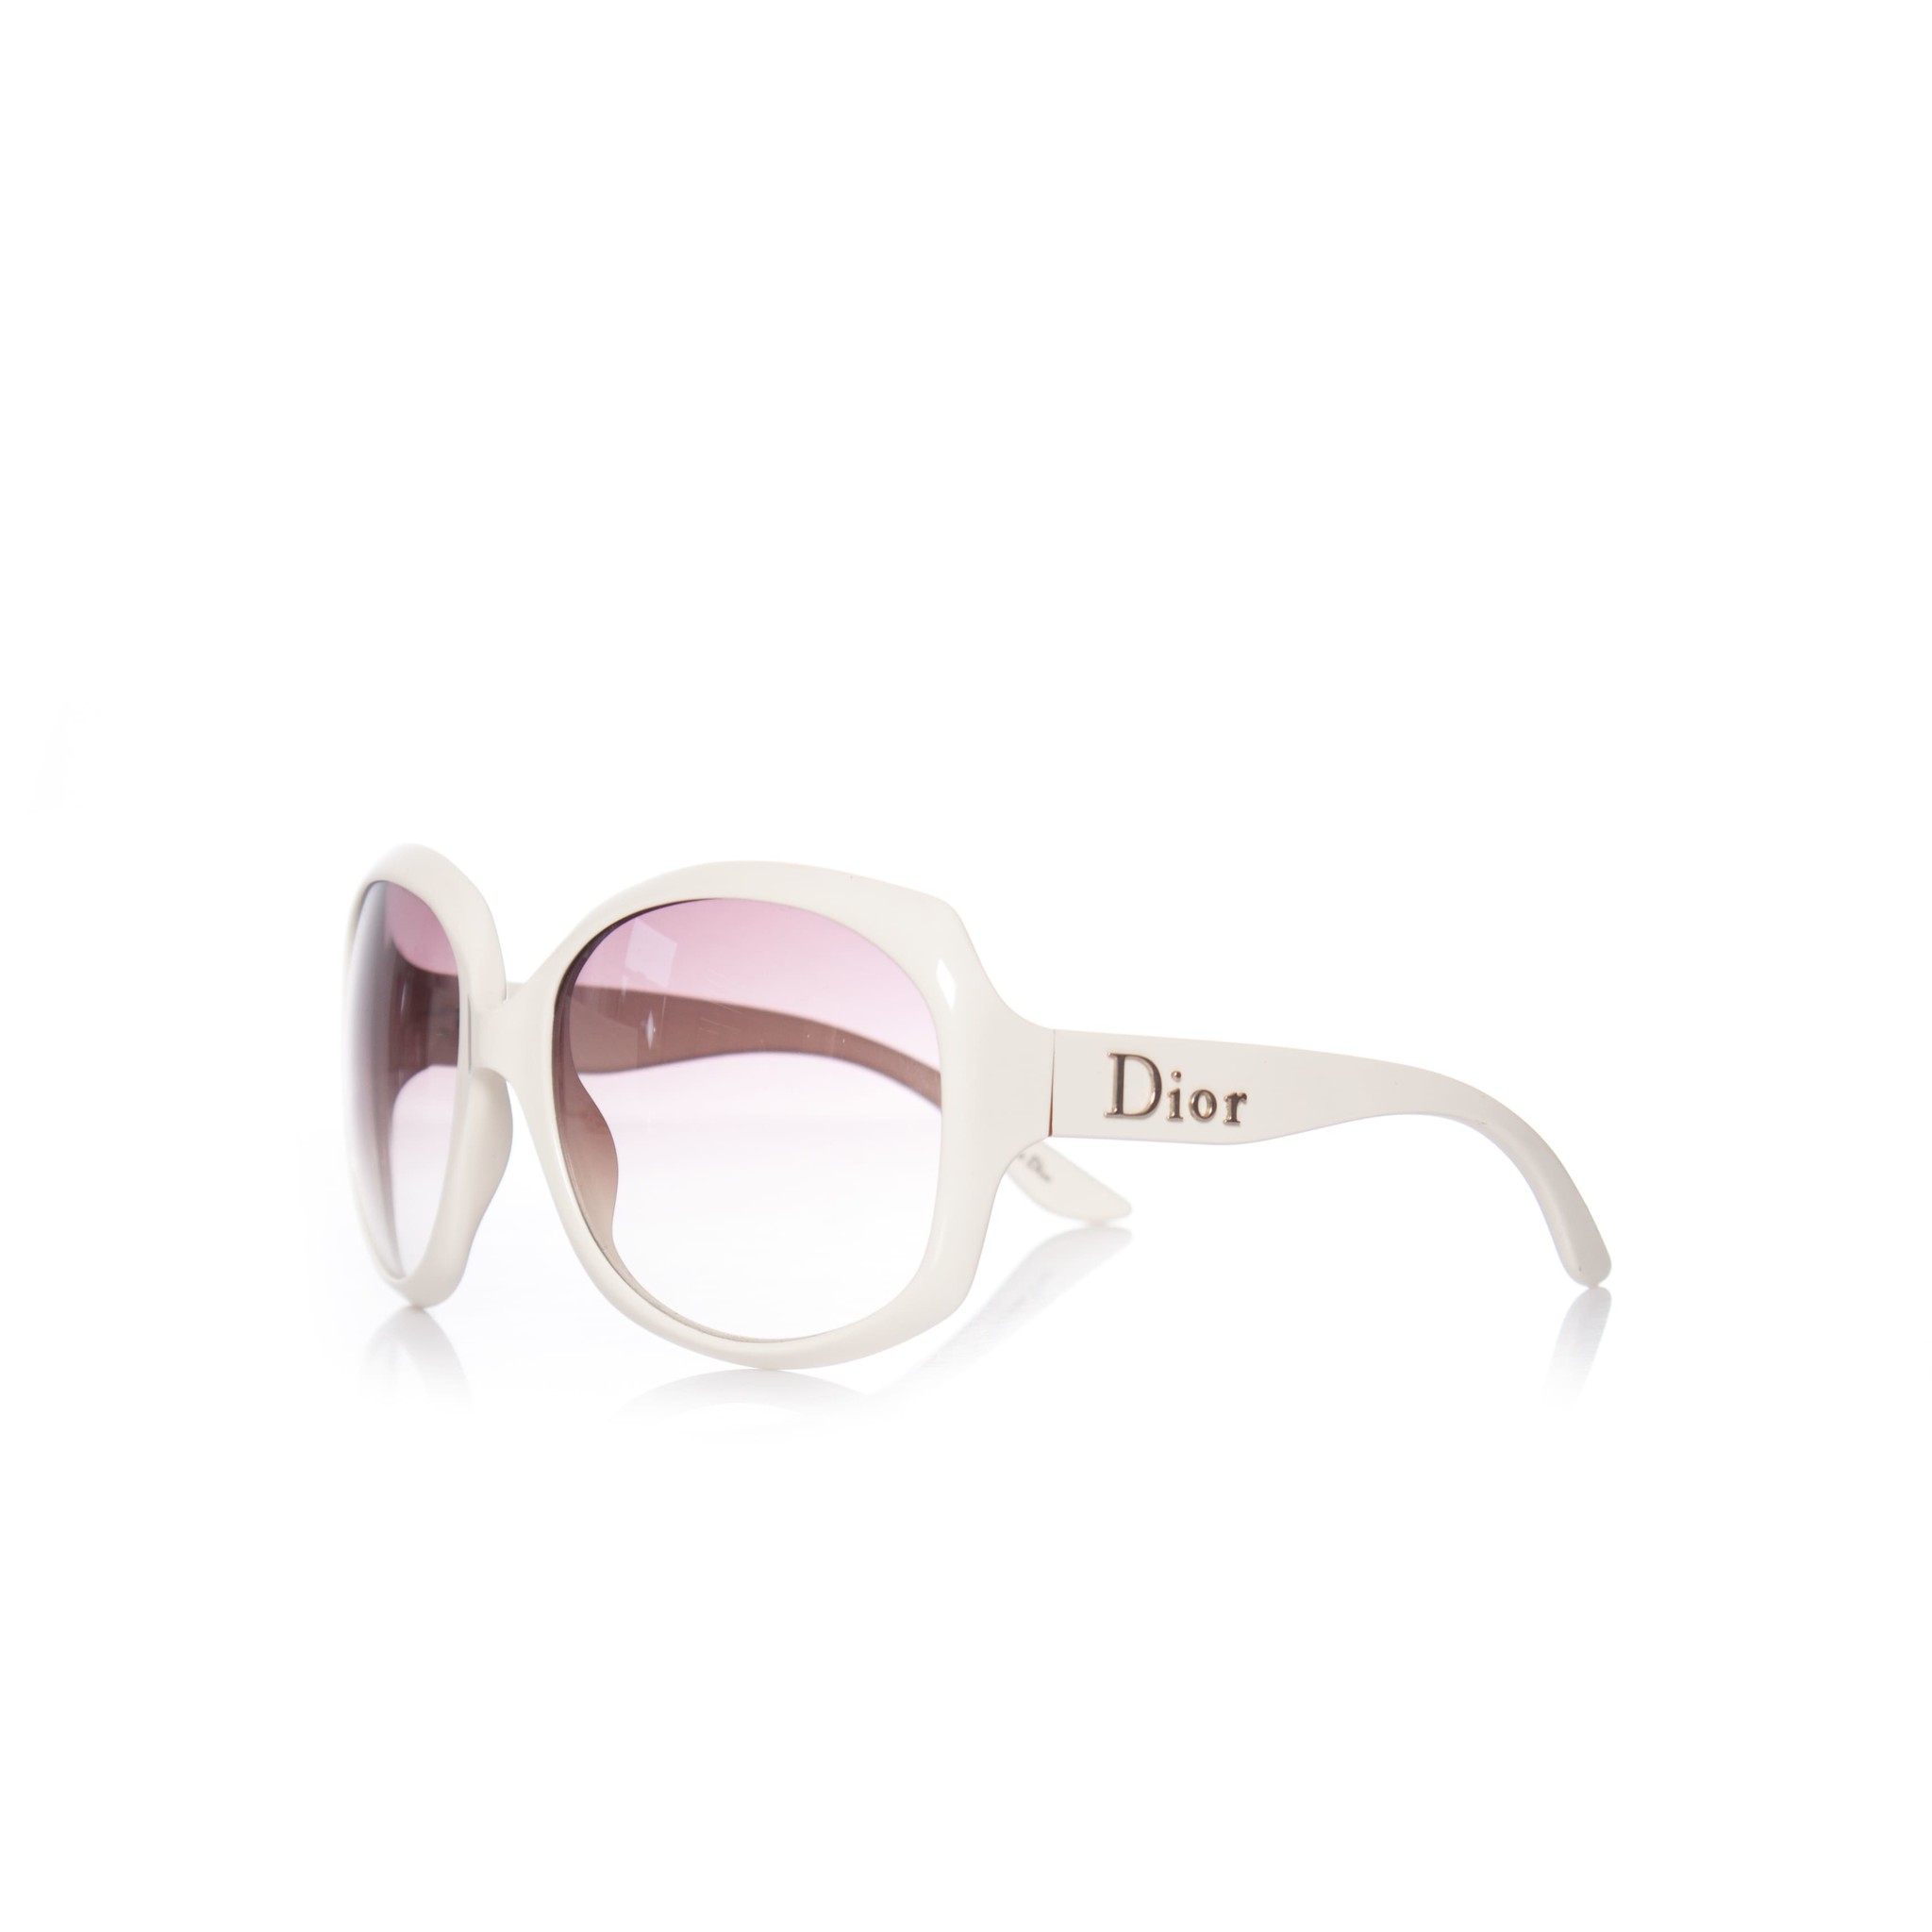 dior glossy sunglasses